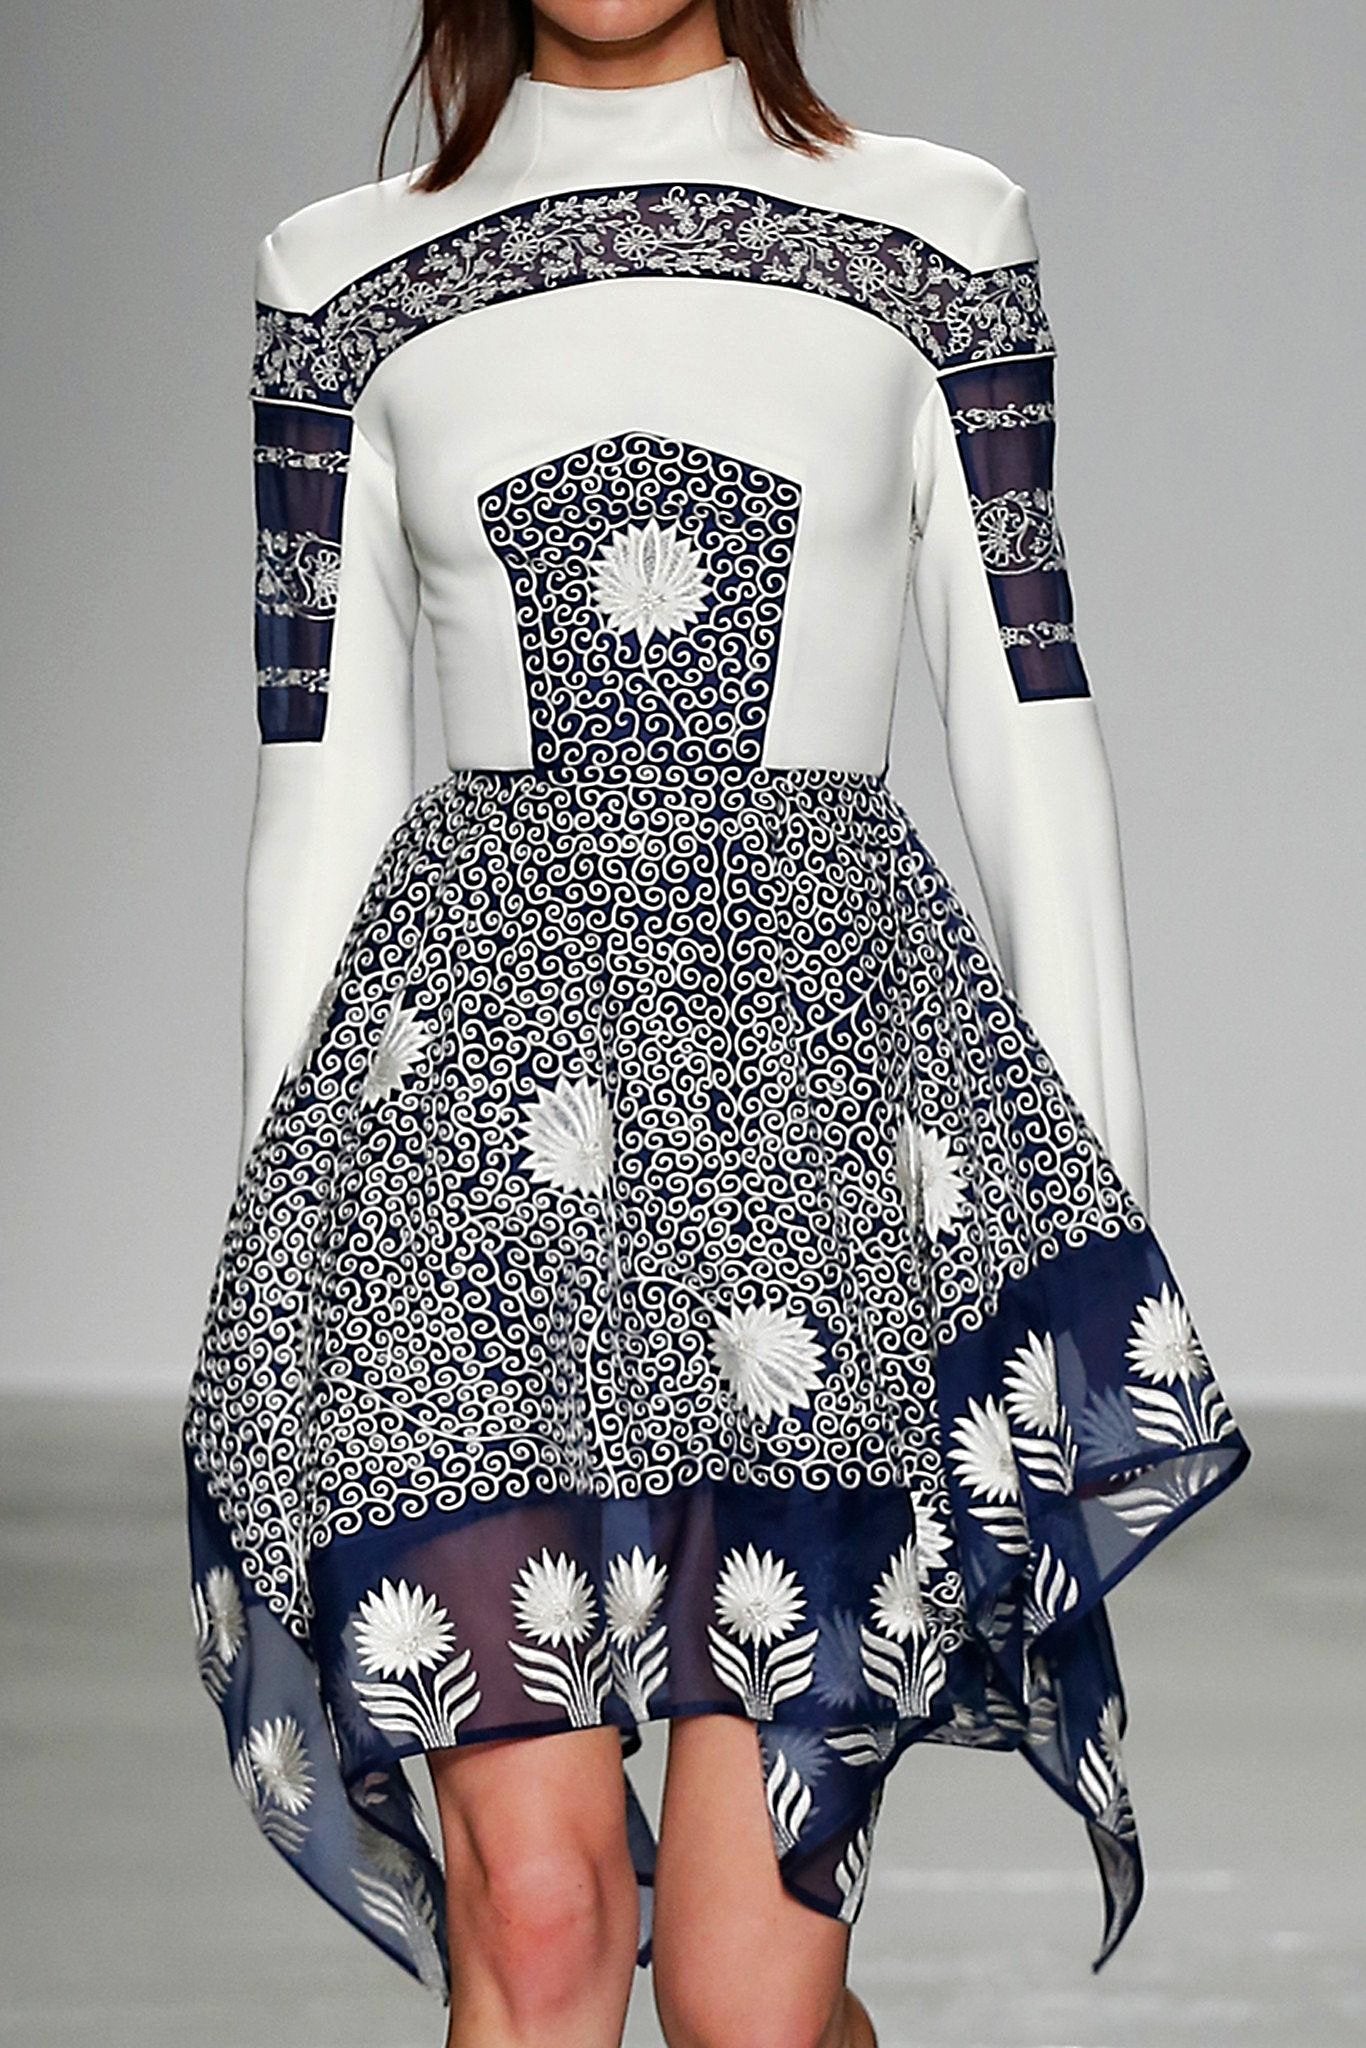 Dahilia Embroidery Dress - 70% off